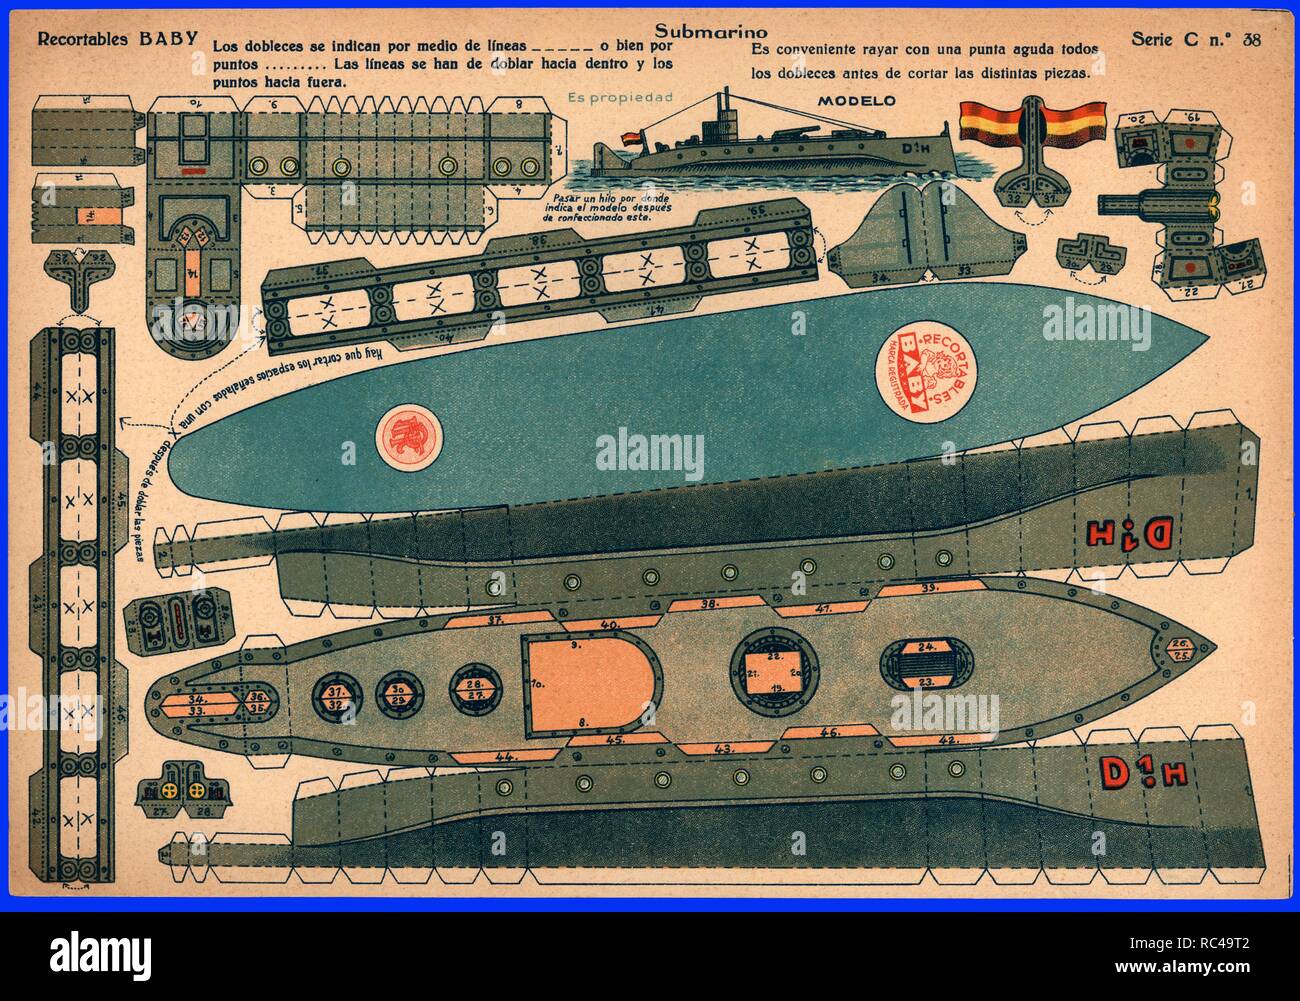 Recortable infantil. Construcción de barcos. Submarino. Recortables Baby.  Barcelona, año 1936 Stock Photo - Alamy